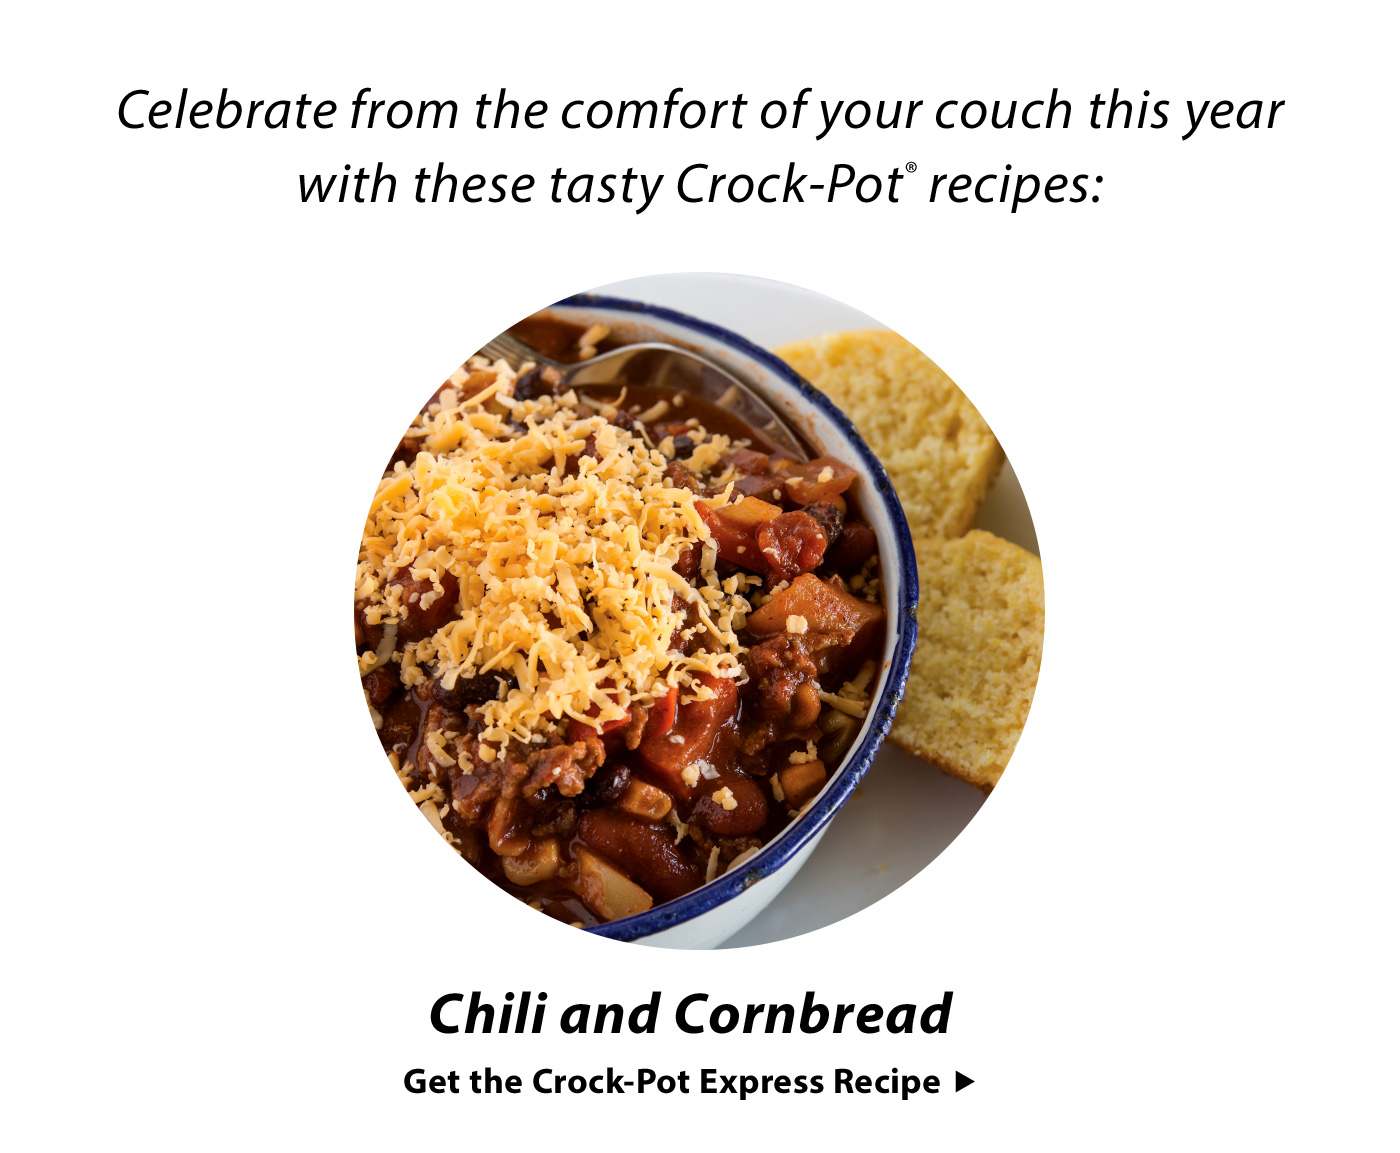 Chili and Cornbread. Get the Crock-Pot Express Recipe